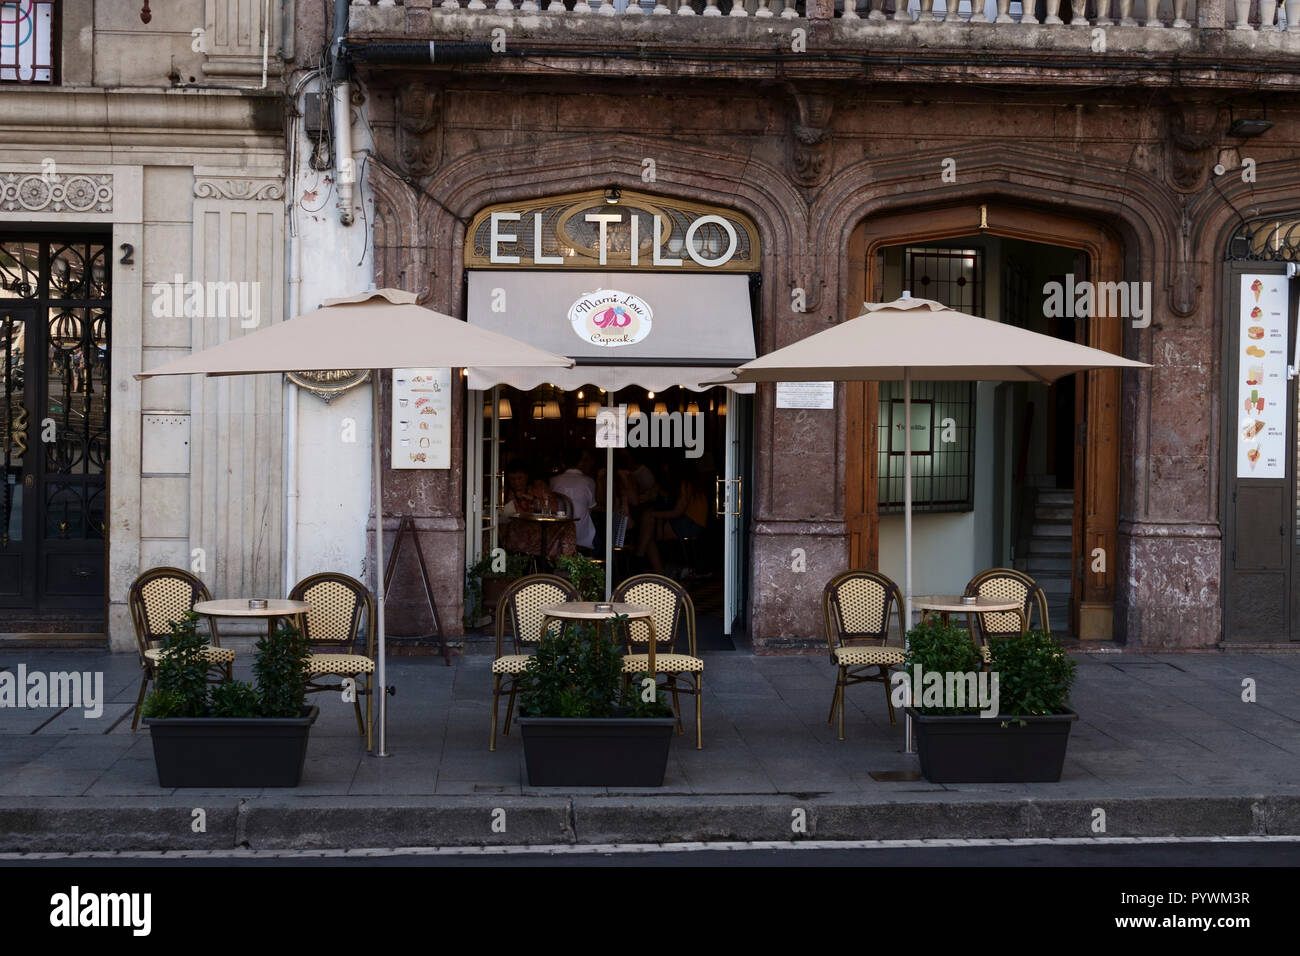 Bilbao City, Basque Region, Spain  El Tllo bar and restaurant in the Arriaga area near the Theatre of the same name Stock Photo